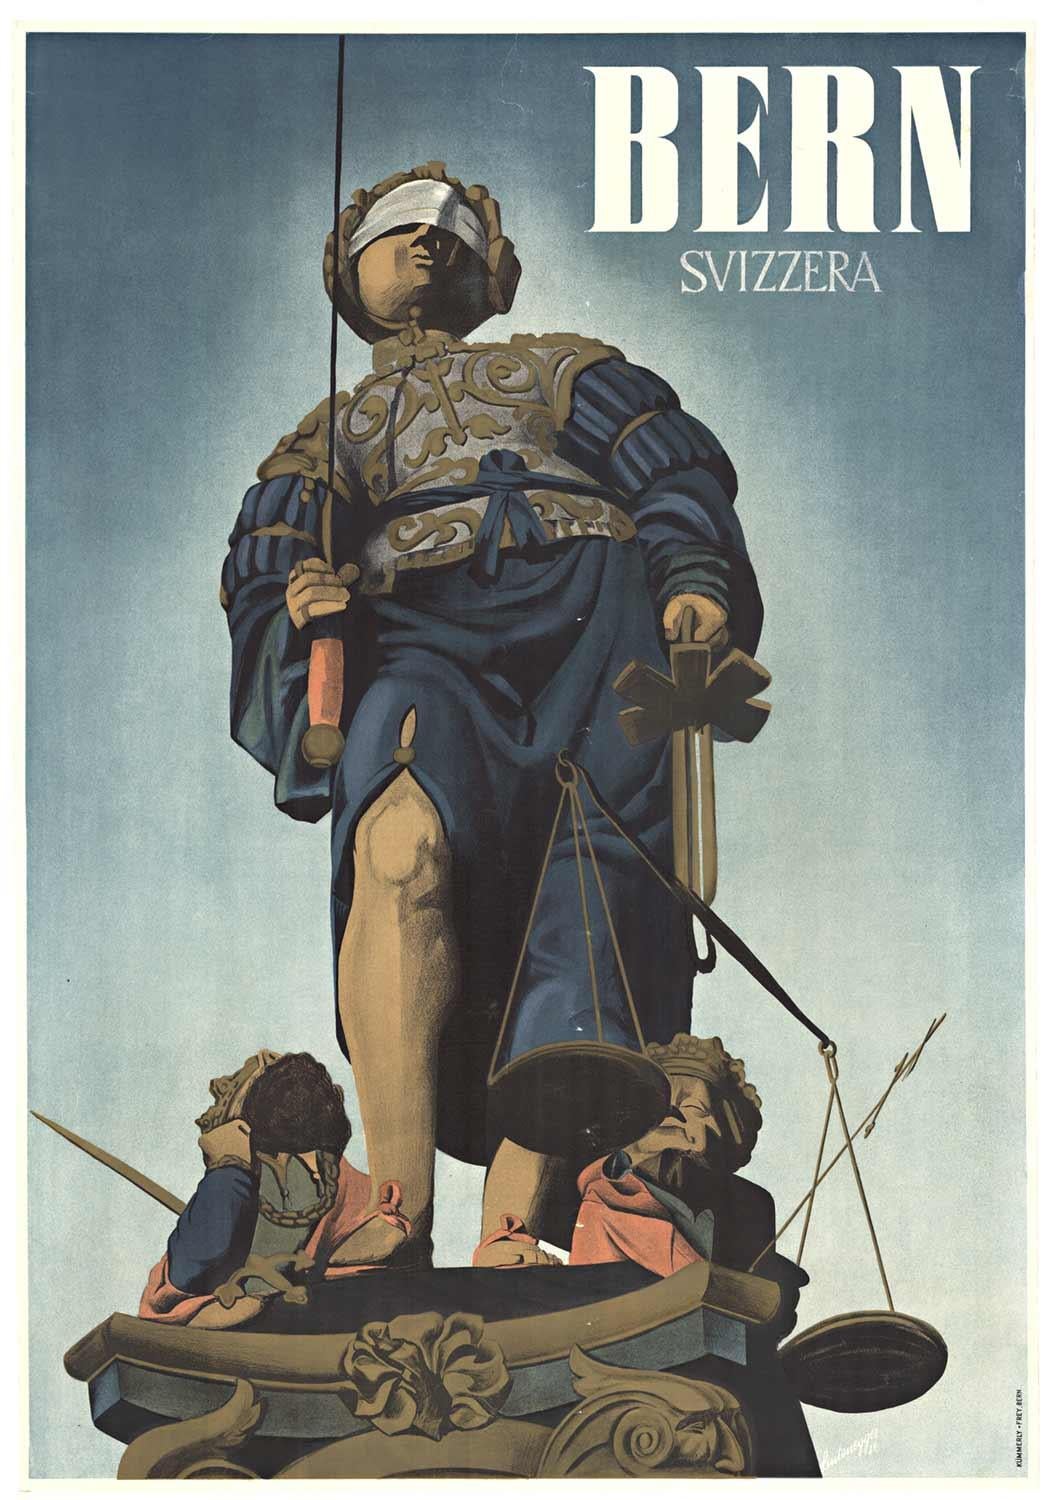 Leutenegger  Still-Life Print - Original "Bern Svizzera" blind scale of justice vintage poster